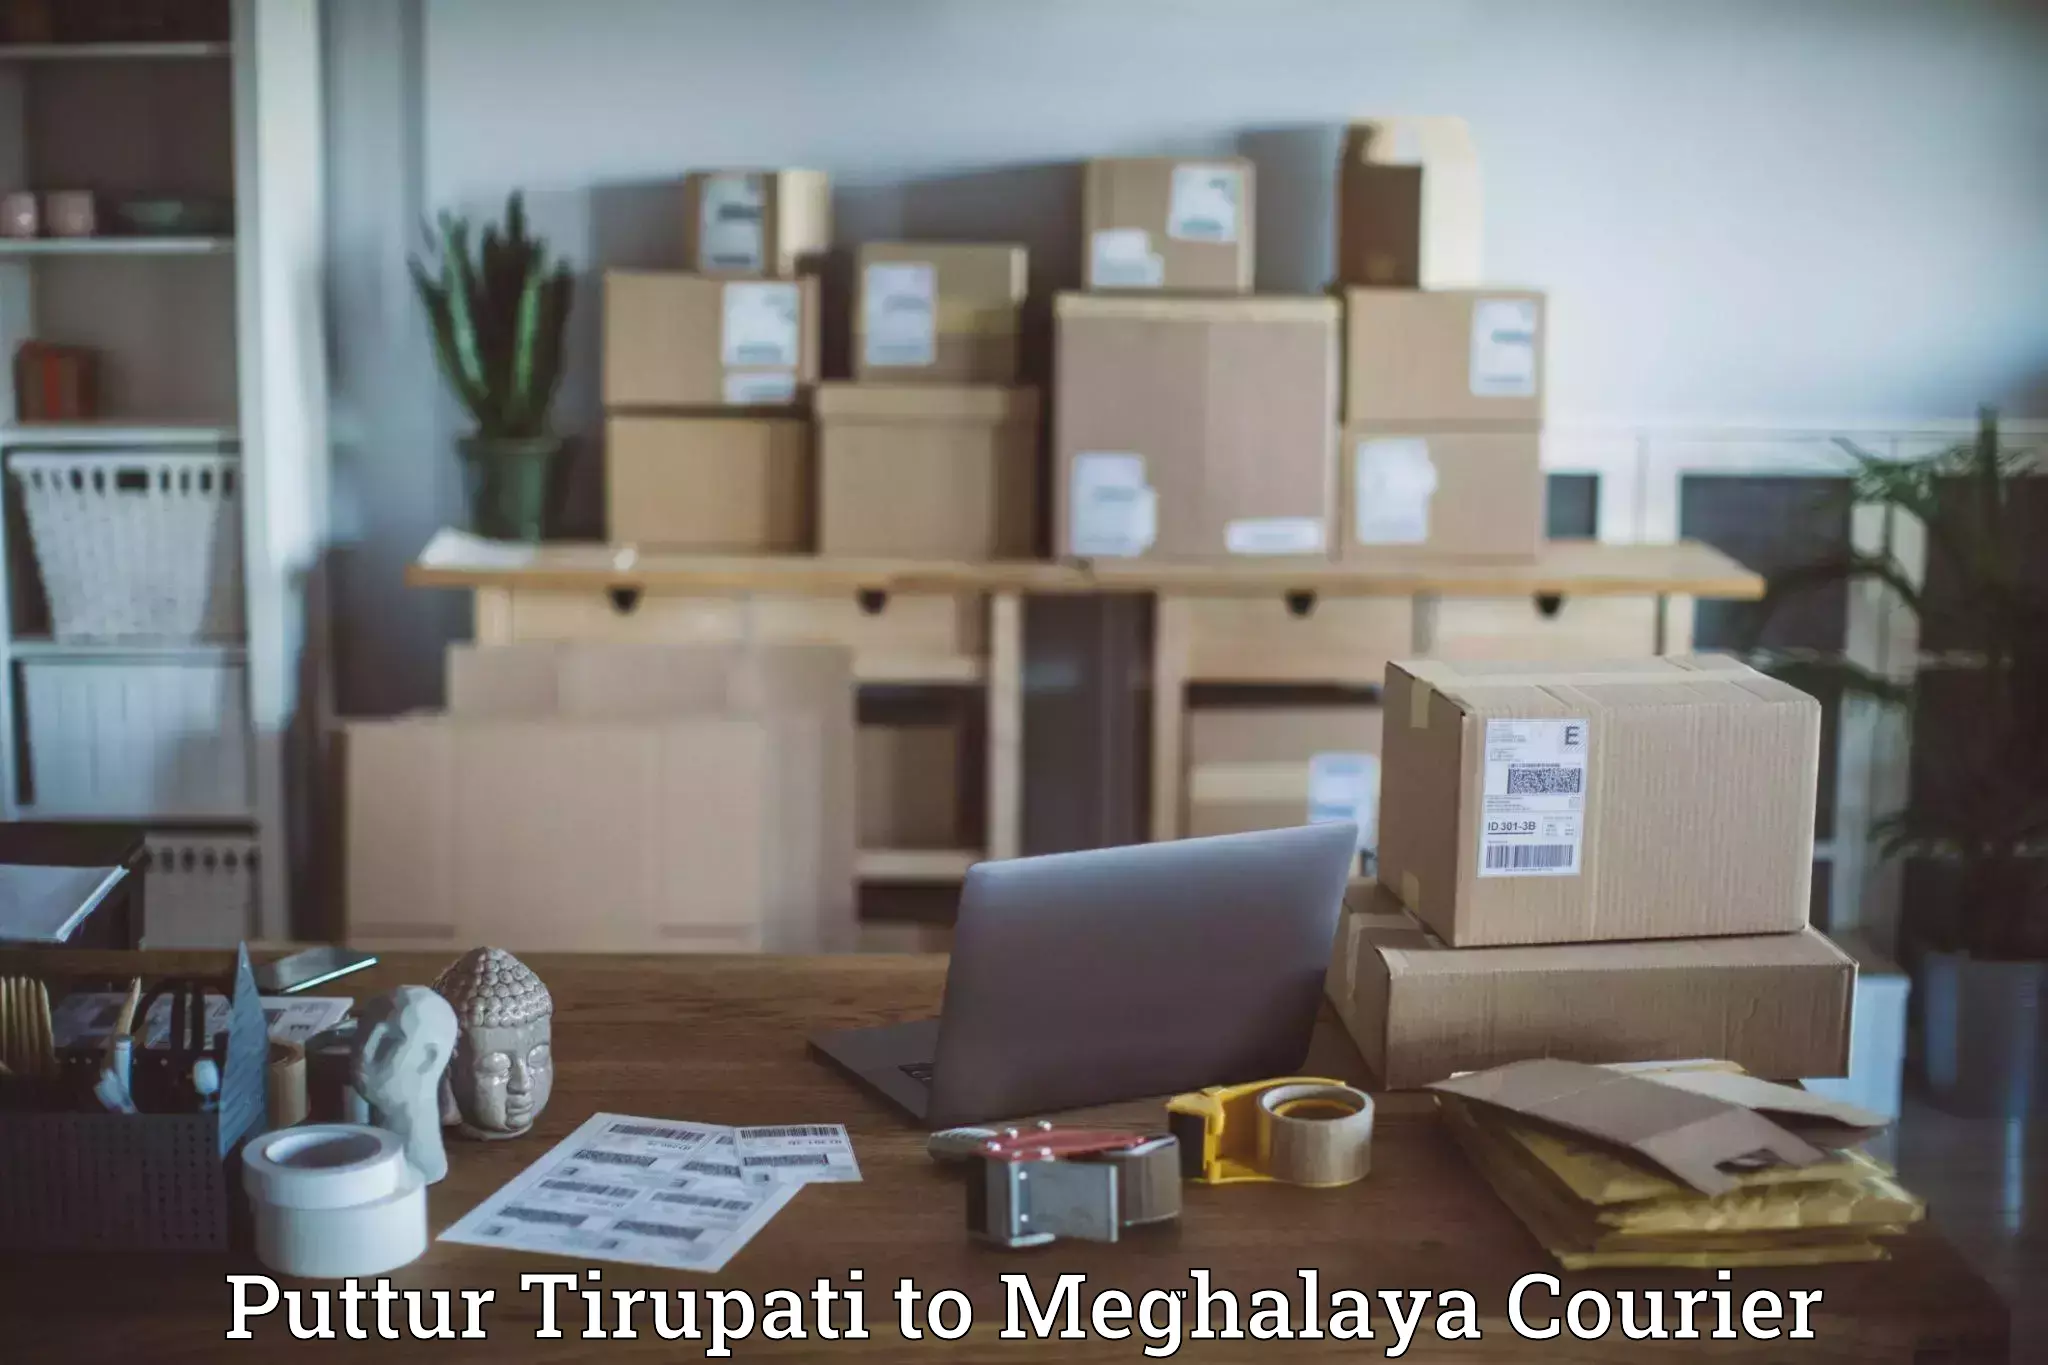 Express delivery network Puttur Tirupati to Meghalaya